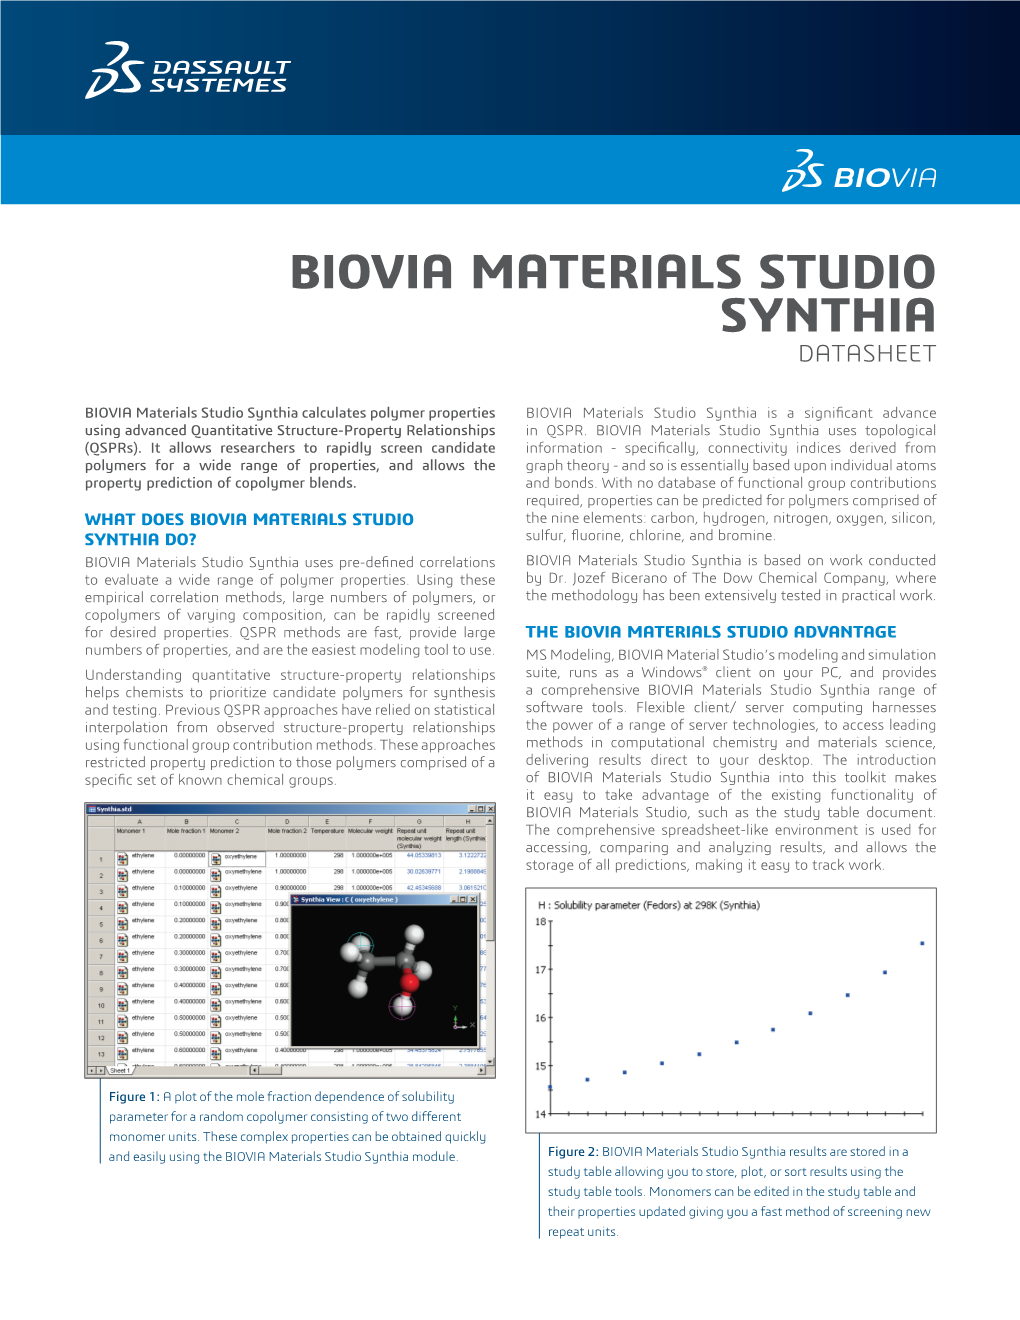 Biovia Materials Studio Synthia Datasheet